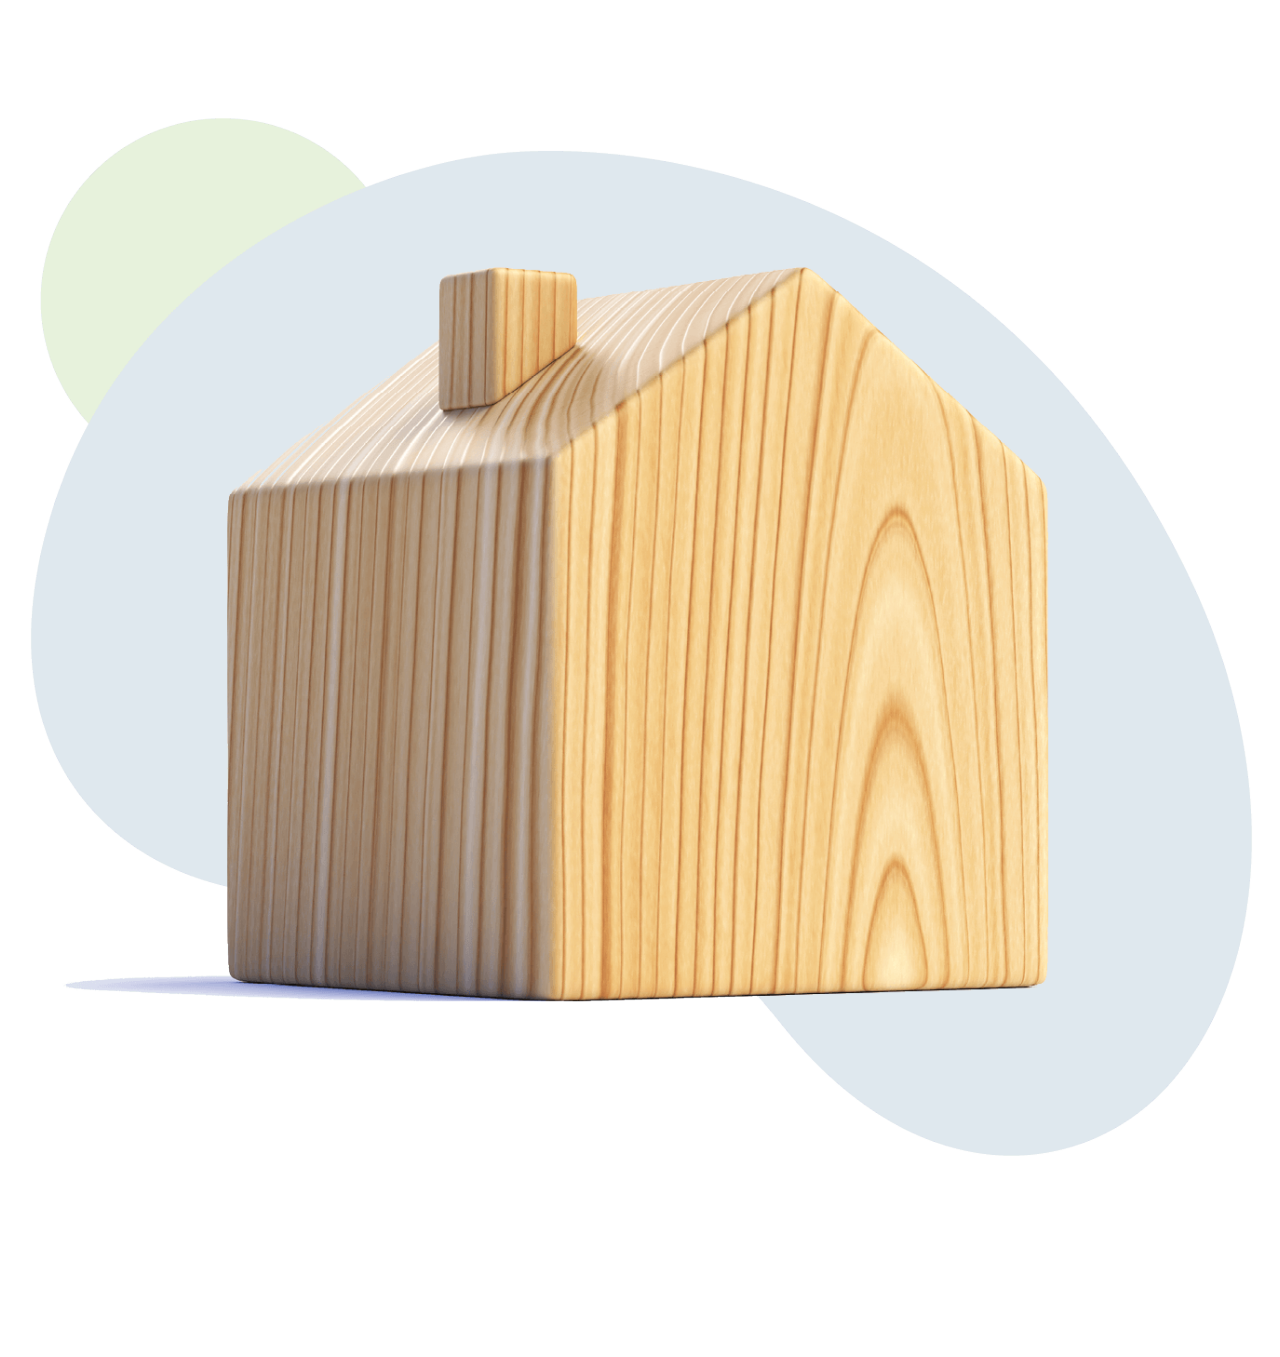 Wooden block house